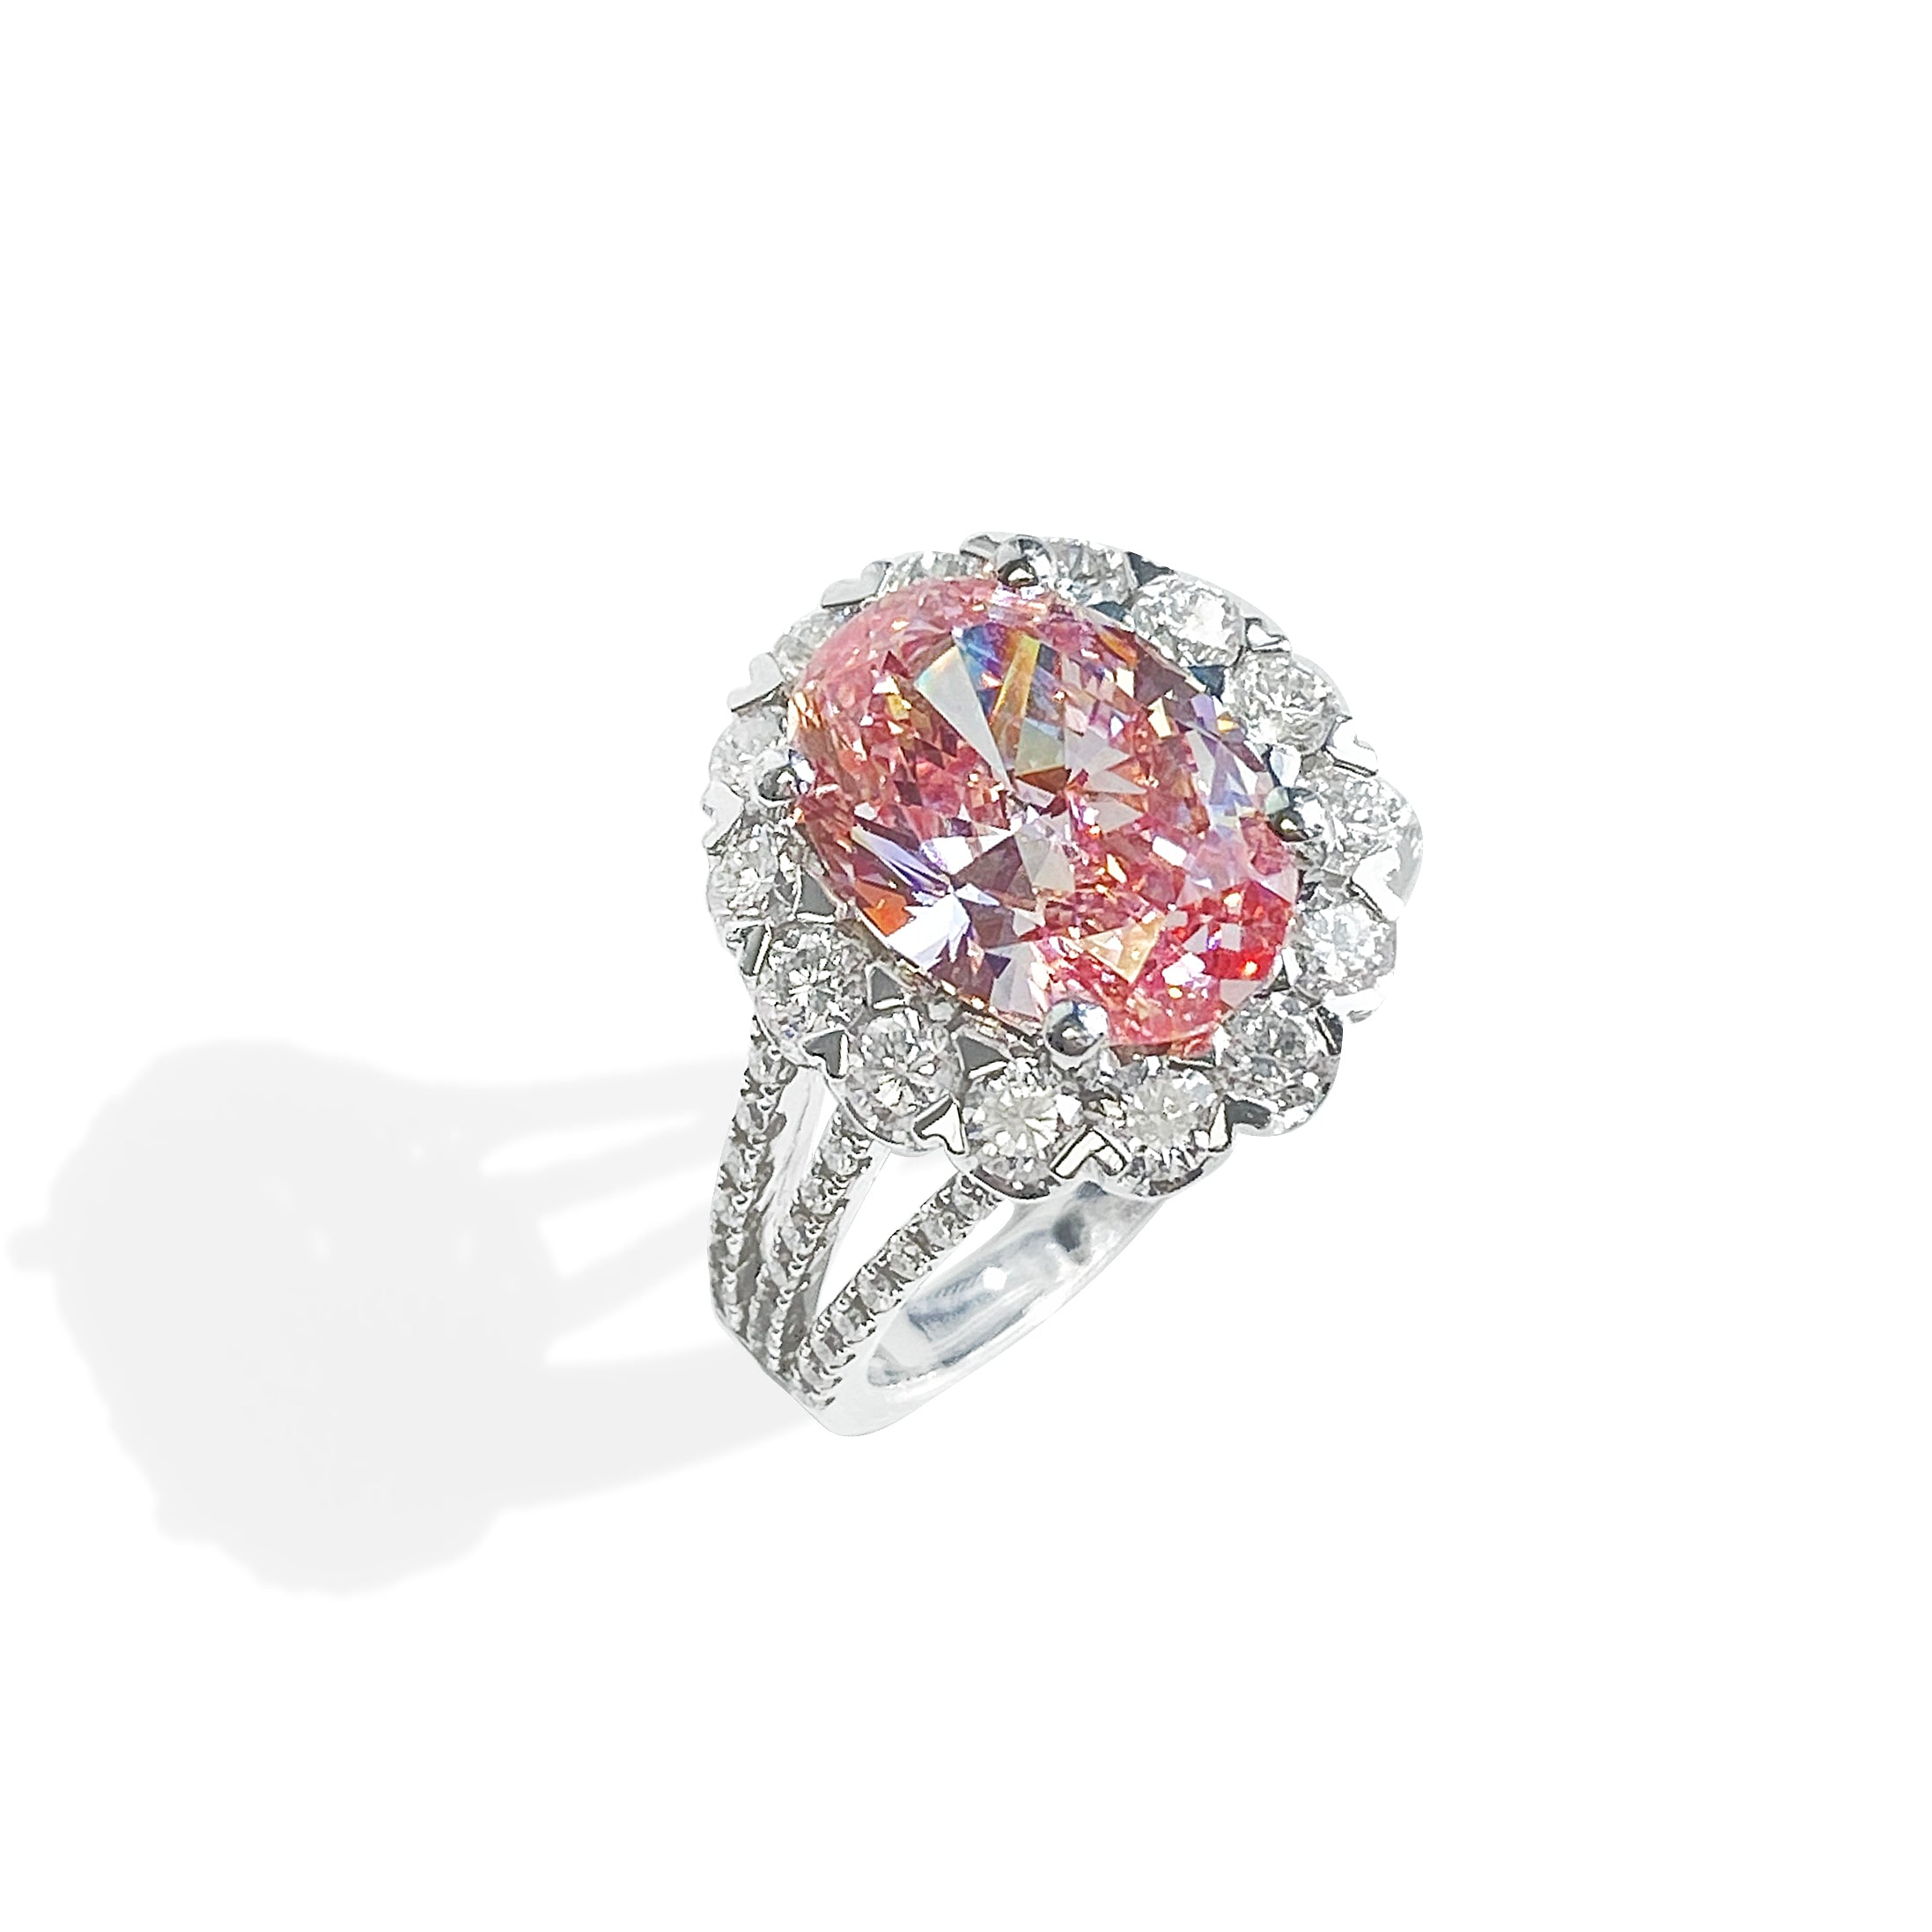 FLAWLESS! 3.60 Carat Pink Oval Diamond Halo Ring